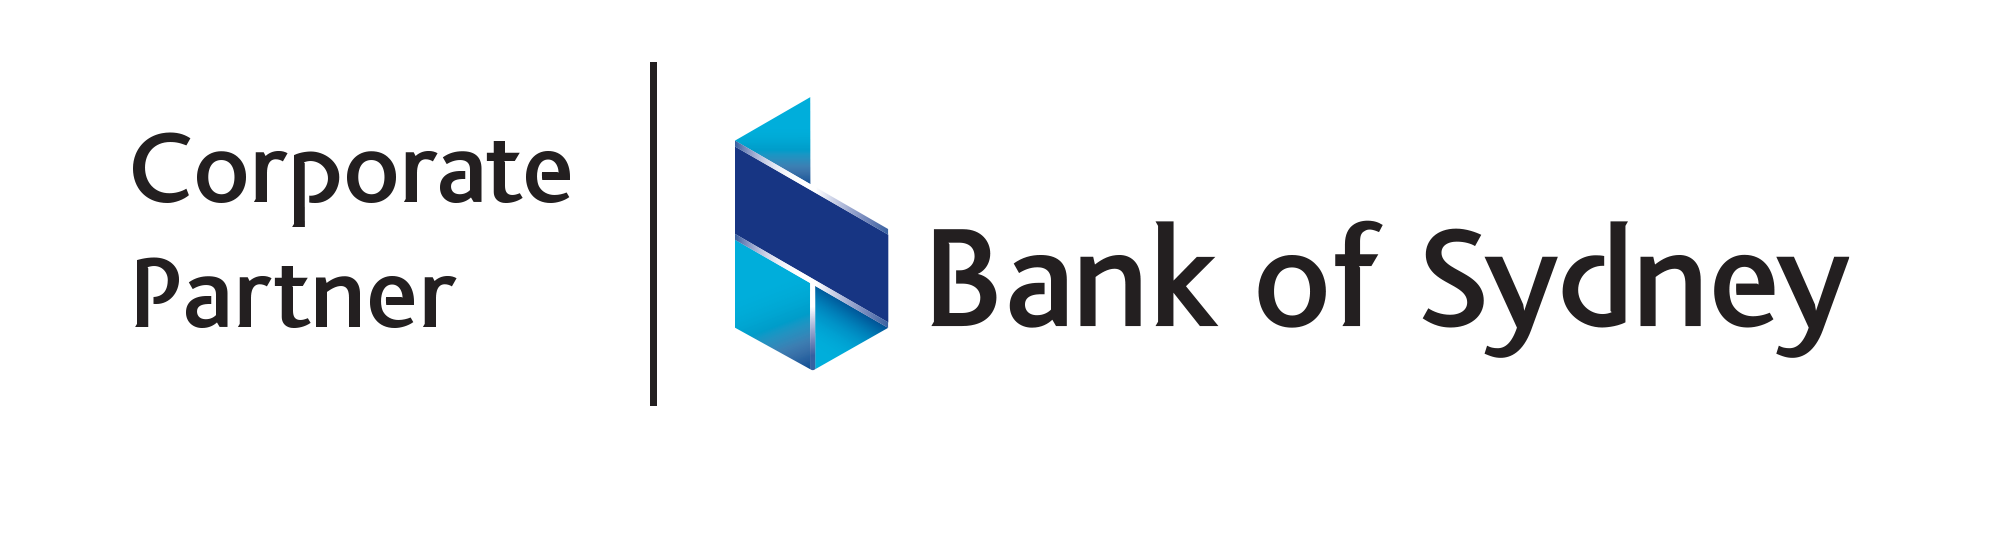 Corporate Partner | Bank of Sydney